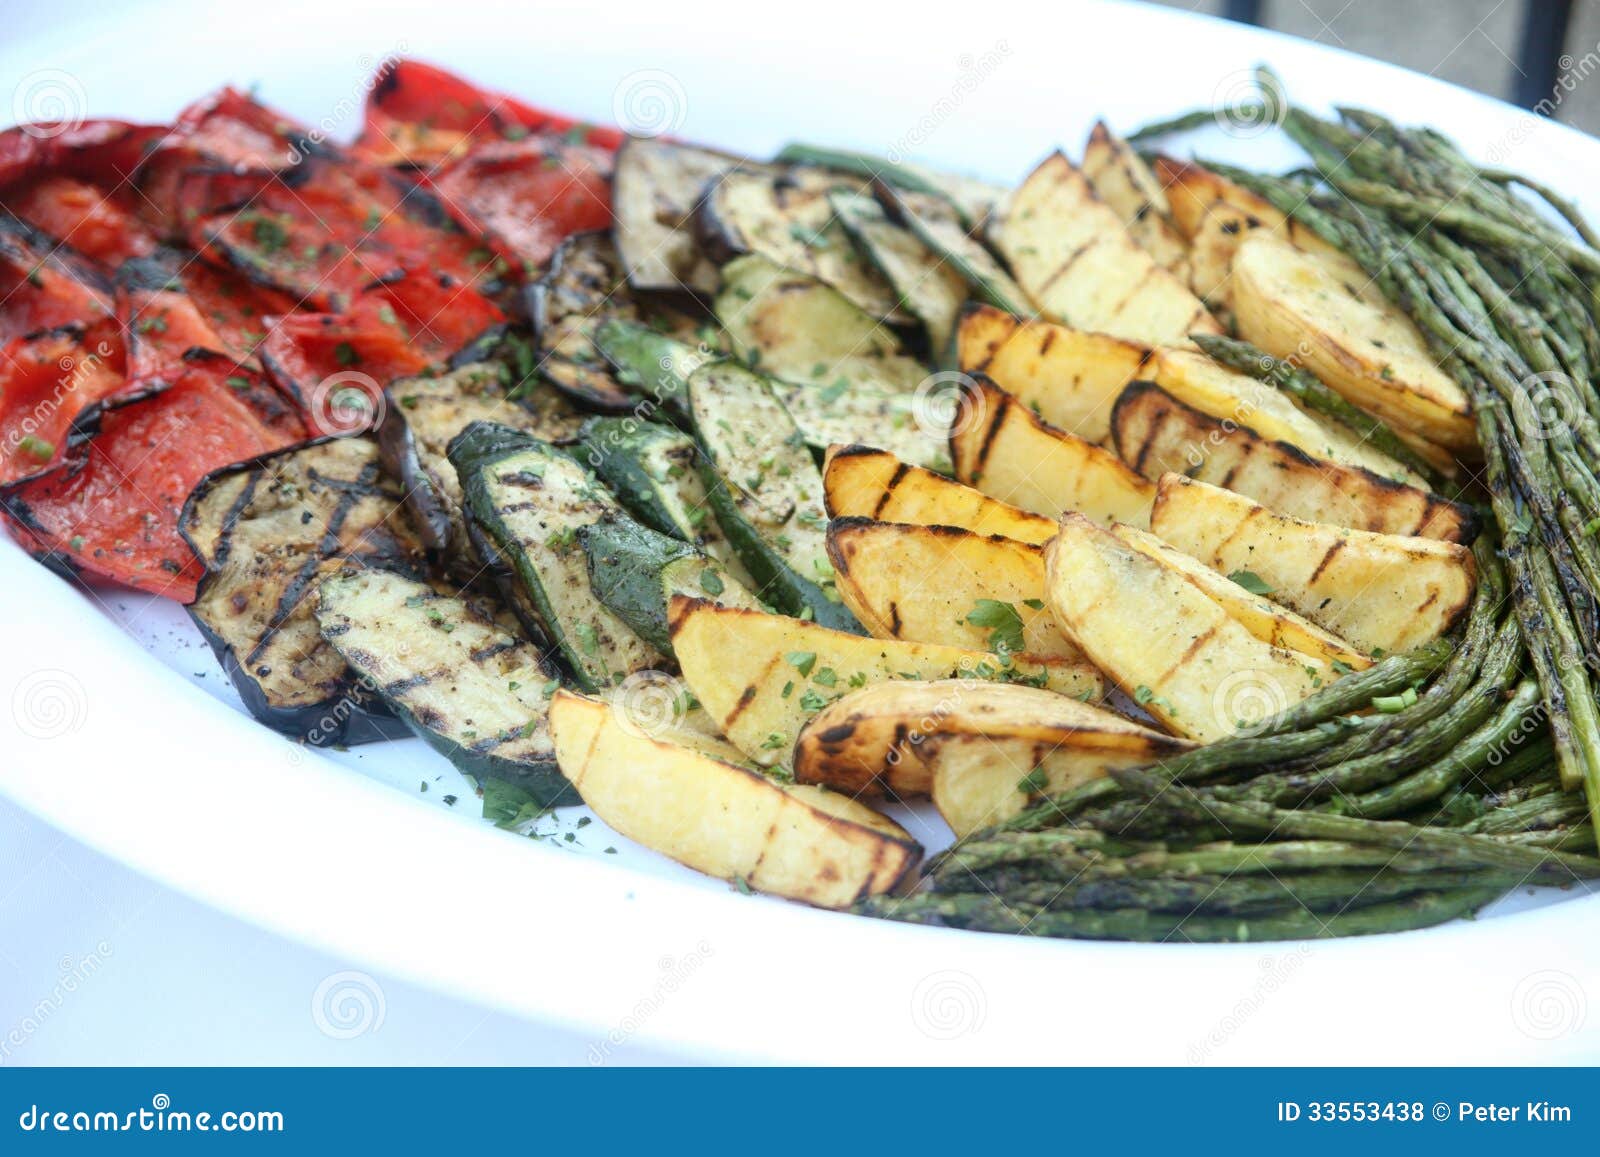 assorted-grilled-vegetables-plate-335534